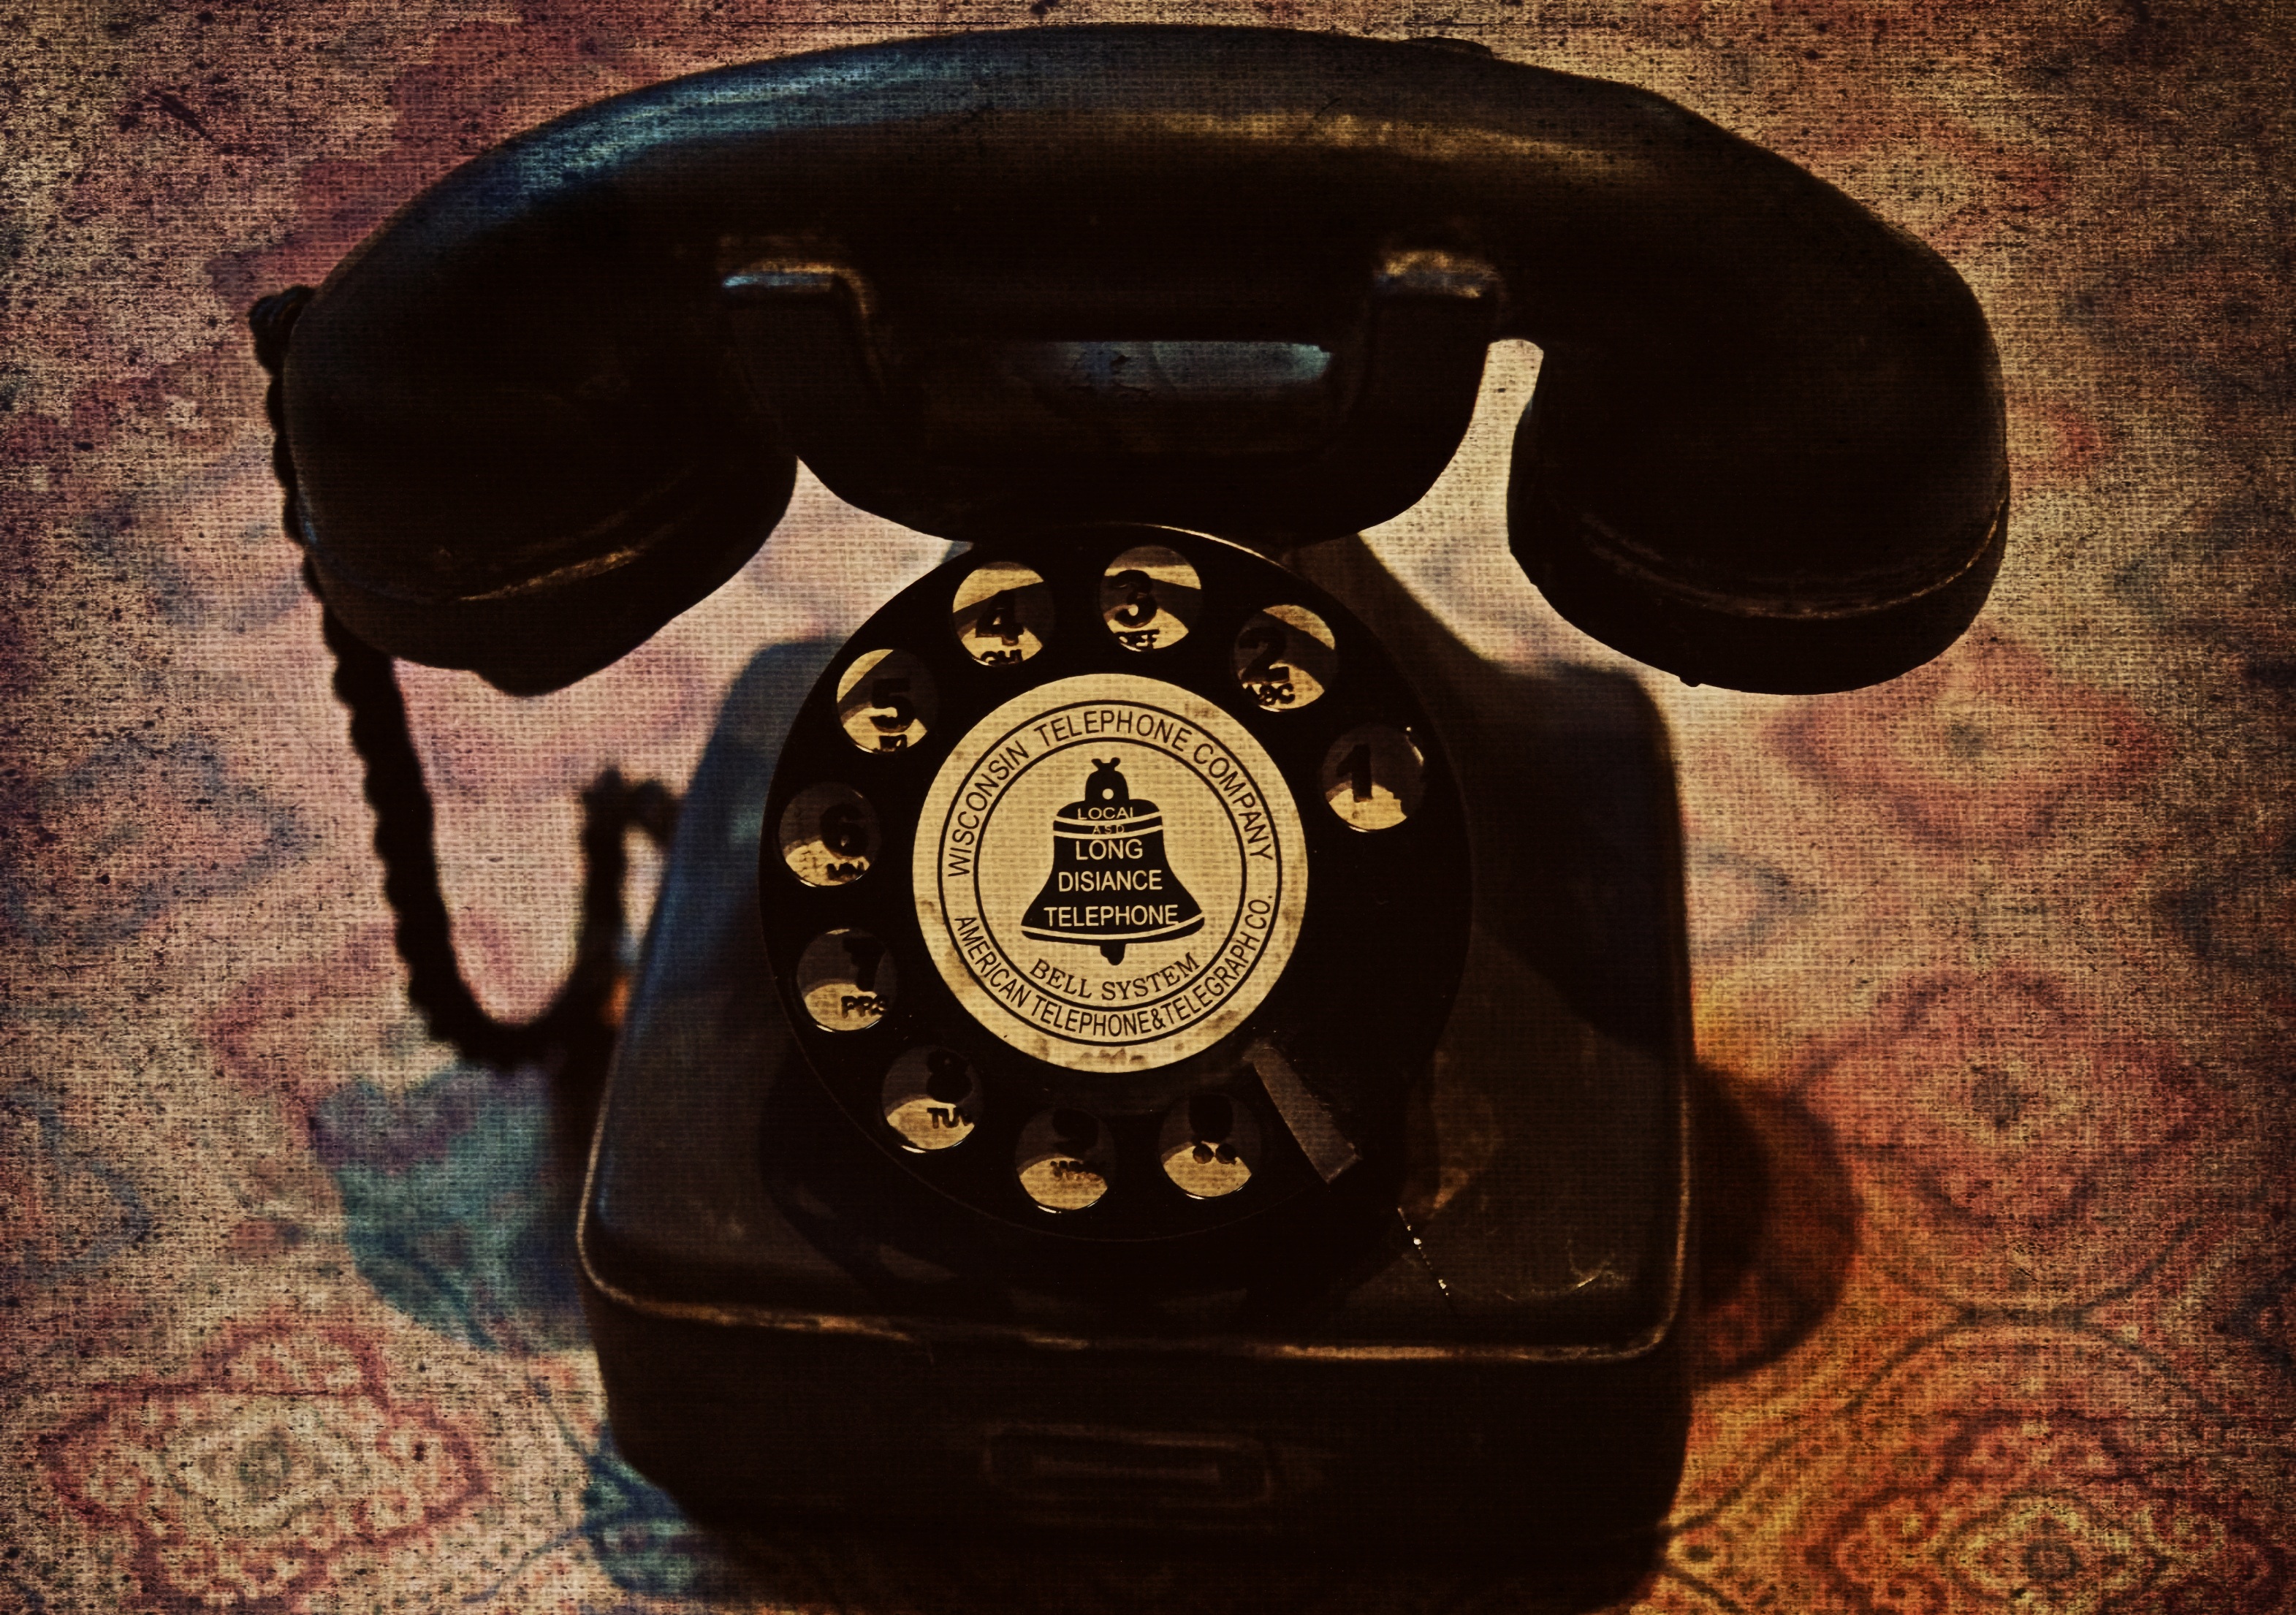 Включи звук старый телефон. Старый телефон. Старинный телефон. Телефонная трубка. Старый телефон с трубкой.